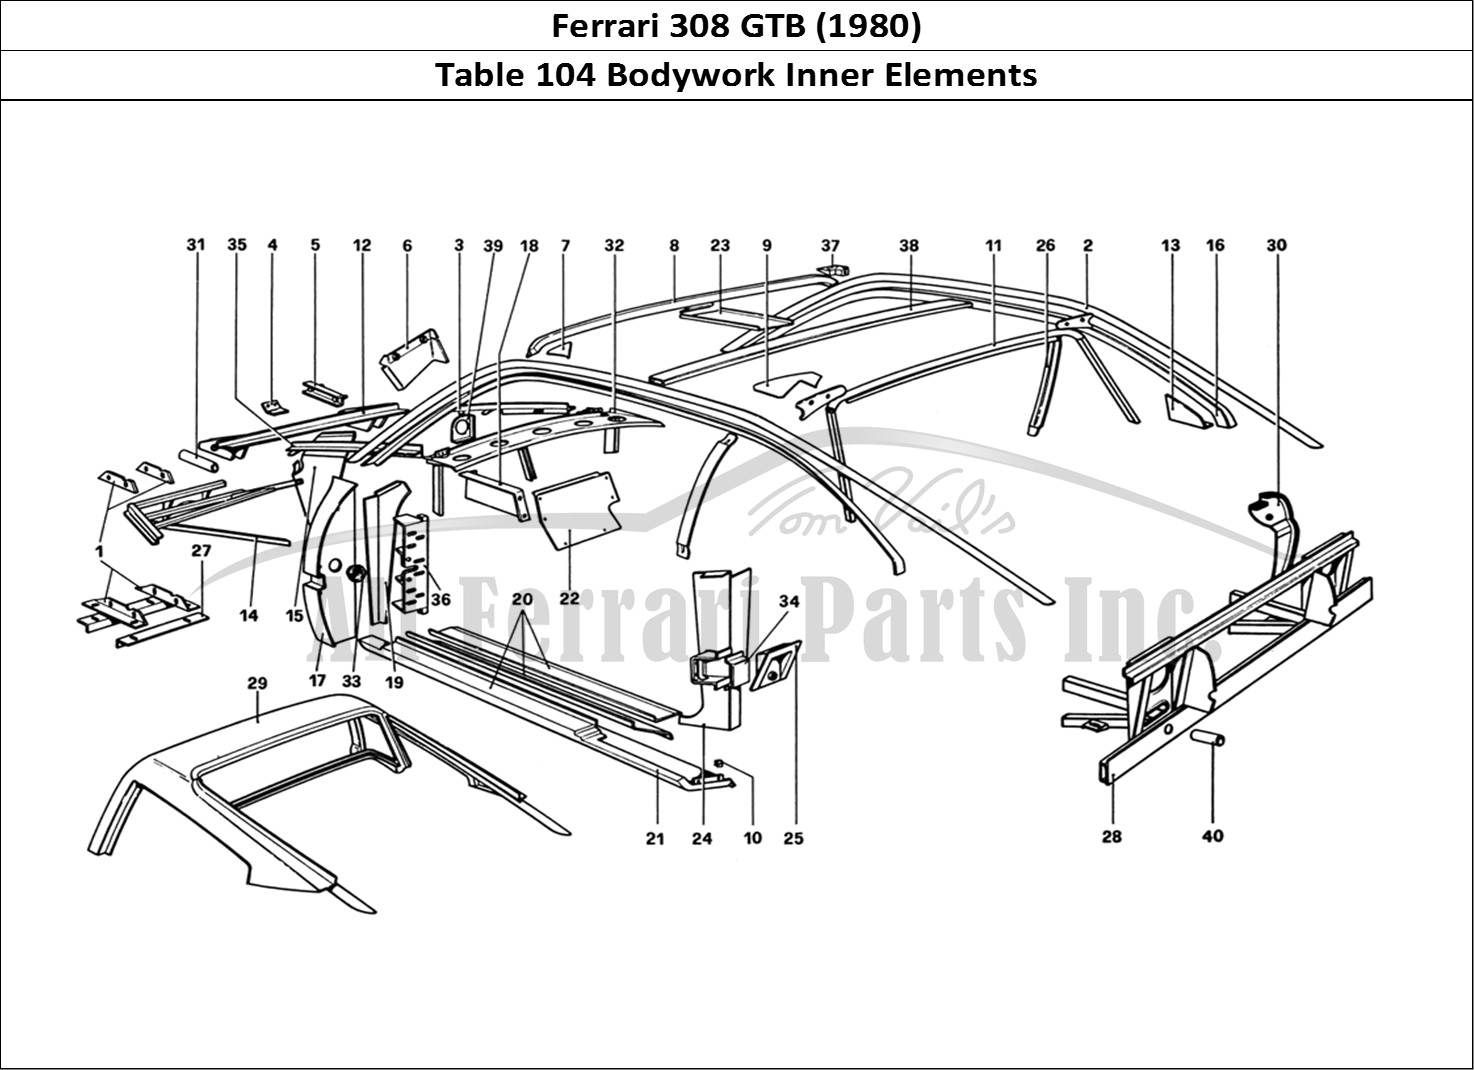 Ferrari Parts Ferrari 308 GTB (1980) Page 104 Body Shell - Inner Elemen